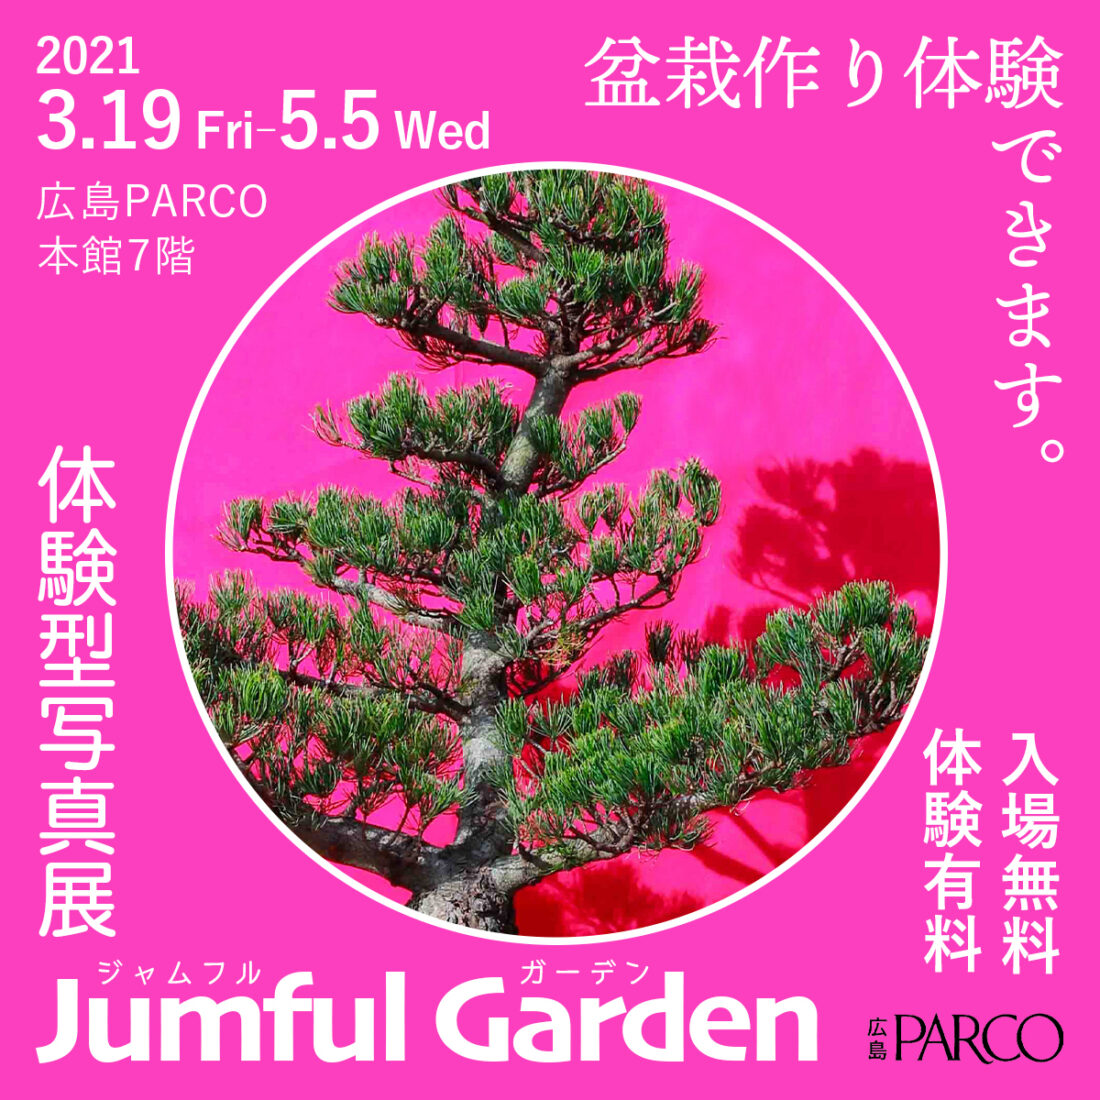 Jumful Garden Flyer